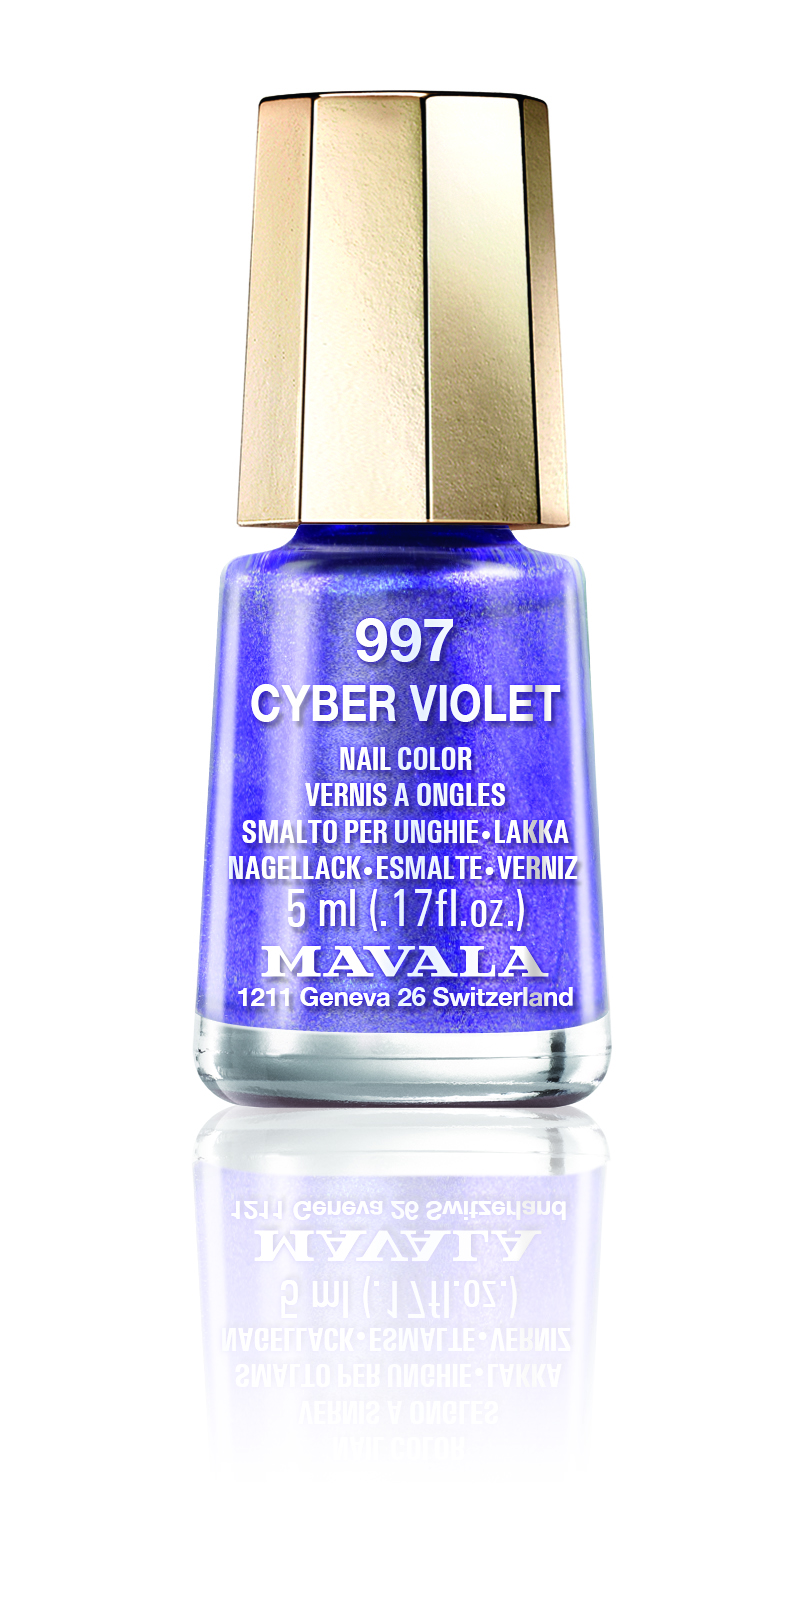 Mavala Cyber Violet nail polish